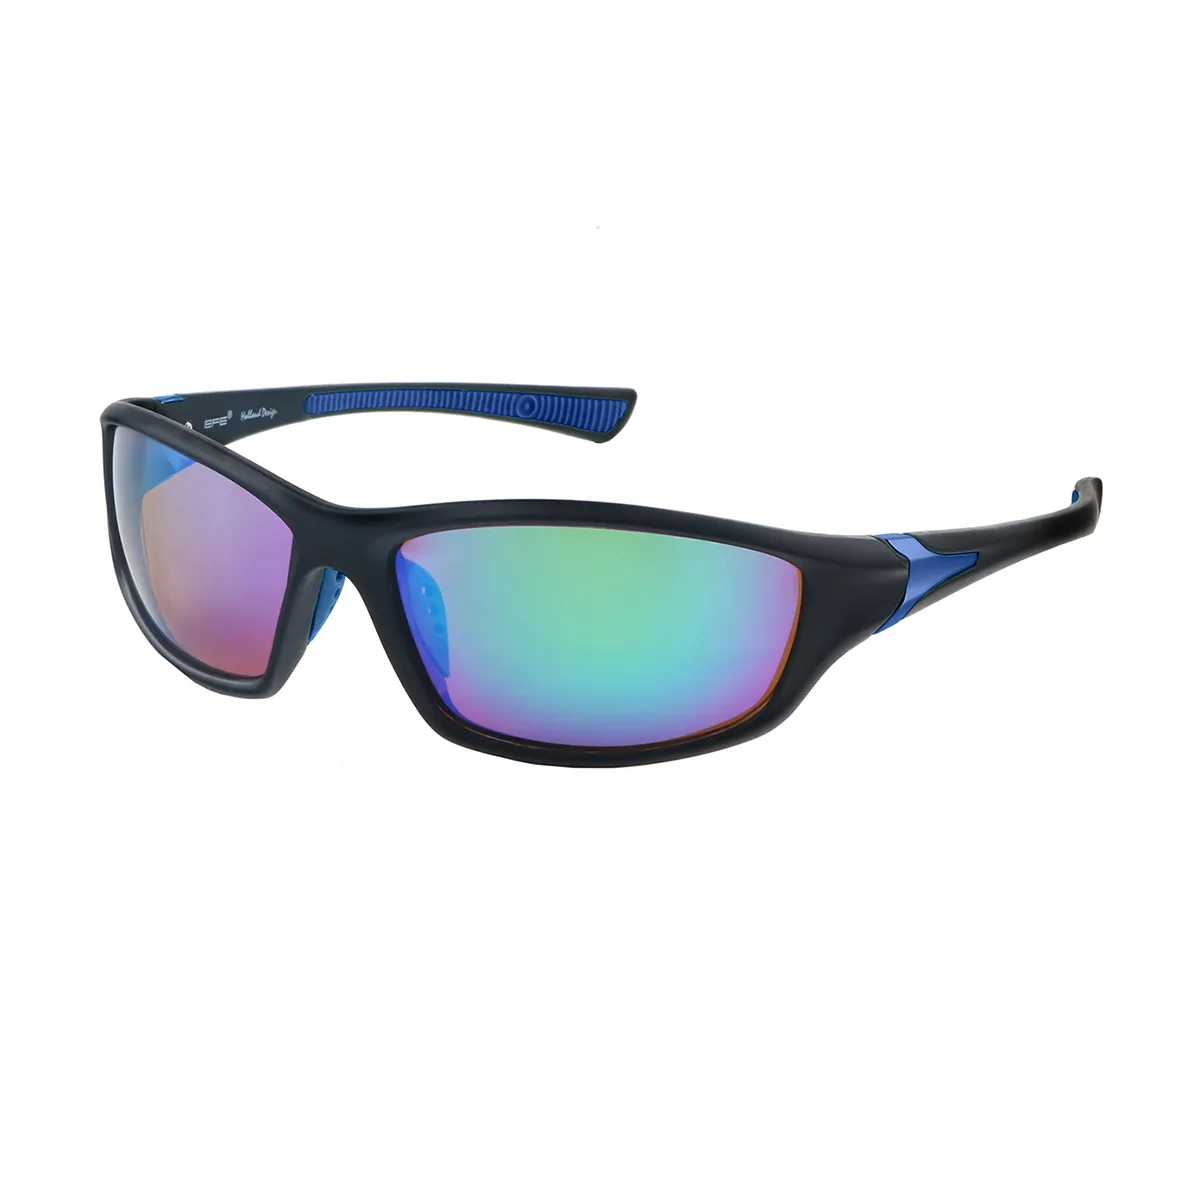 Waylon - Rectangle Black Sunglasses for Men & Women